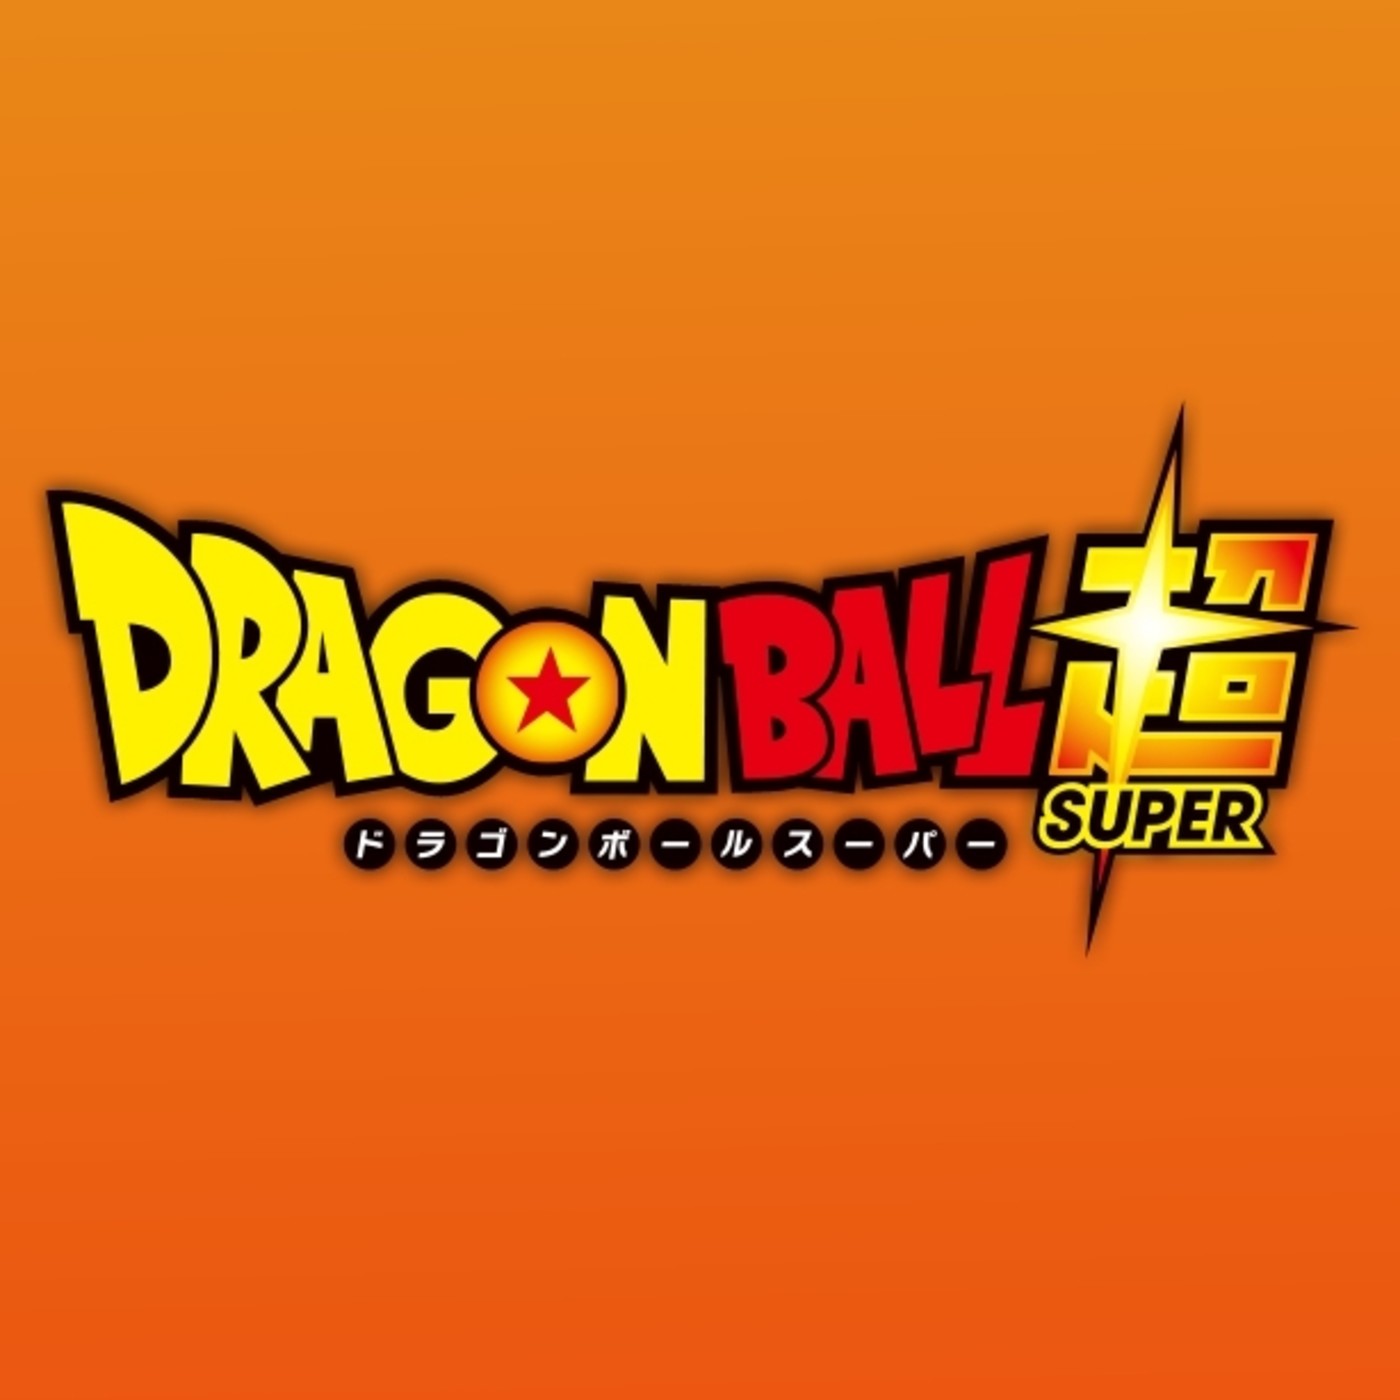 Gambatte Podcast | ’Dragon Ball Super’: Ep. 28, 29 y 30 en castellano